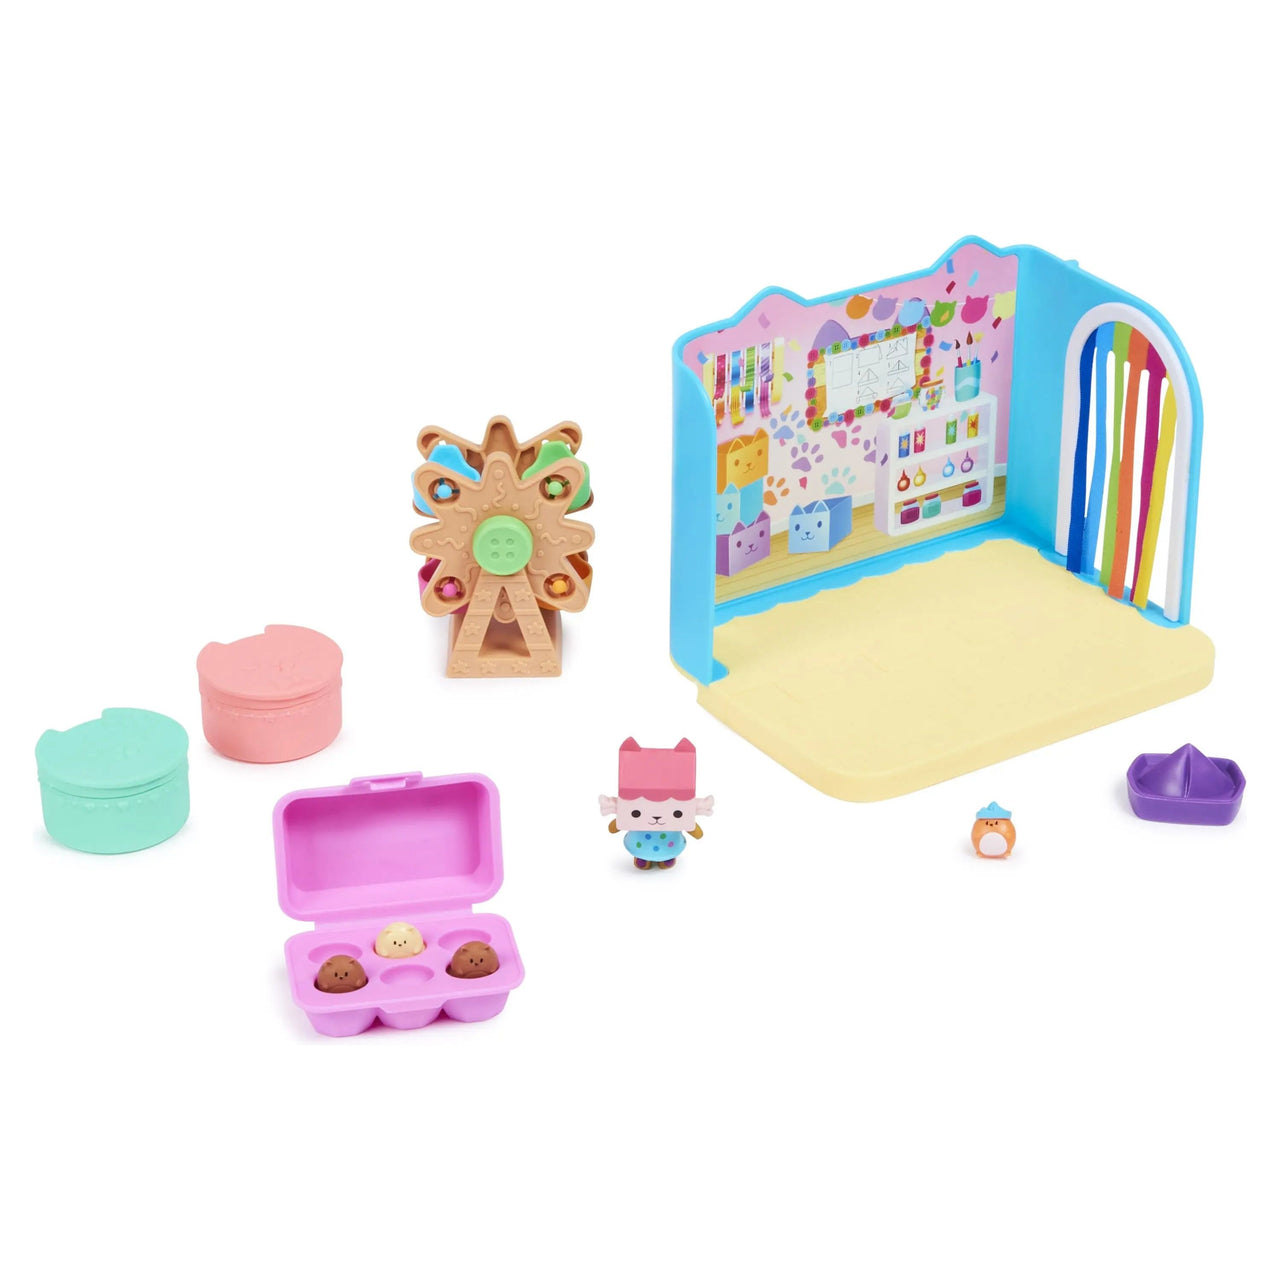 Gabby's Dollhouse Baby Box Craft-a-Riffic Room Gabby's Dollhouse